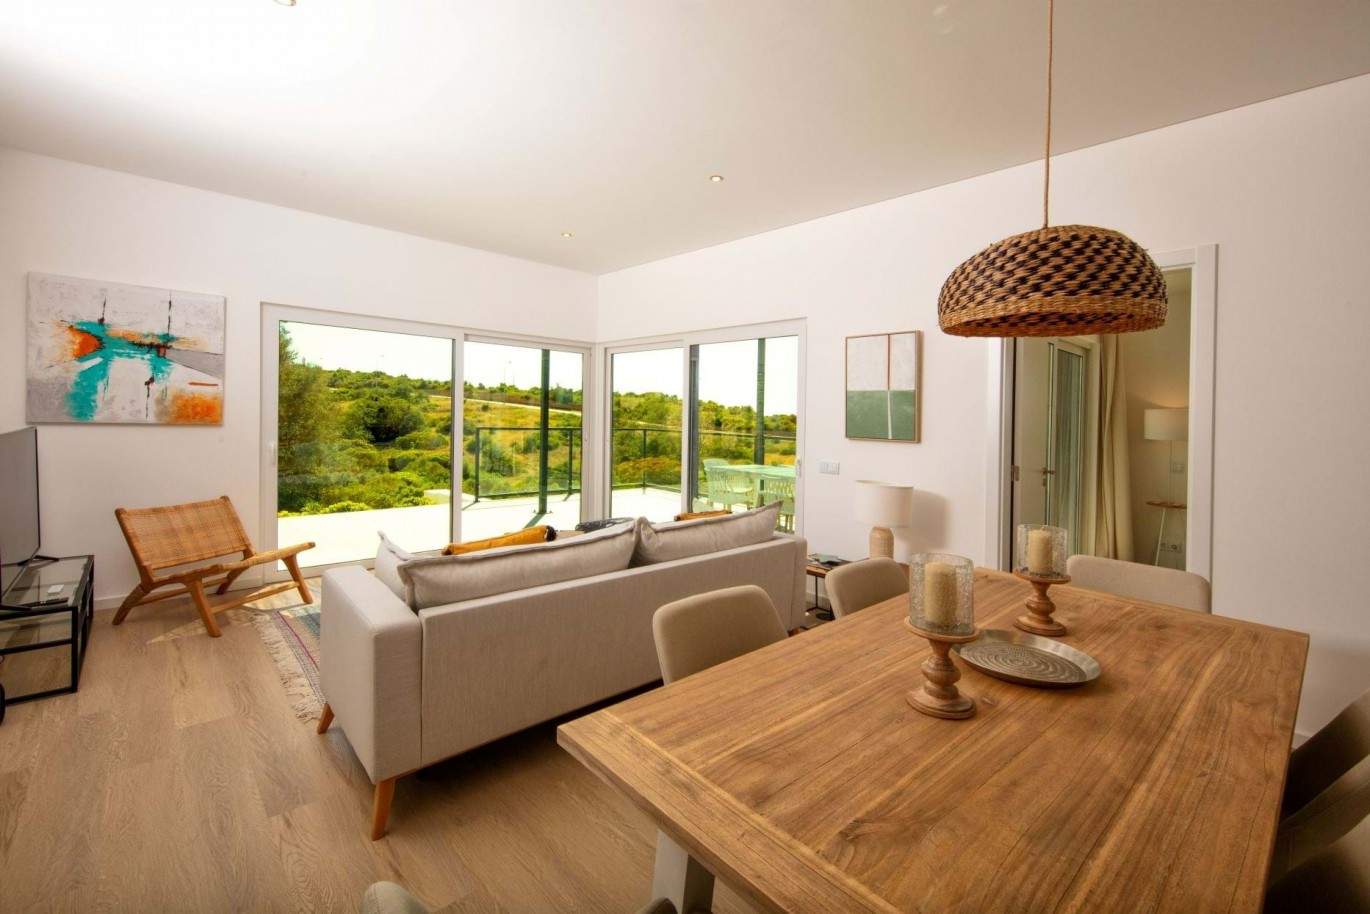 2+1 bedroom villa in resort, for sale in Carvoeiro, Algarve_206835